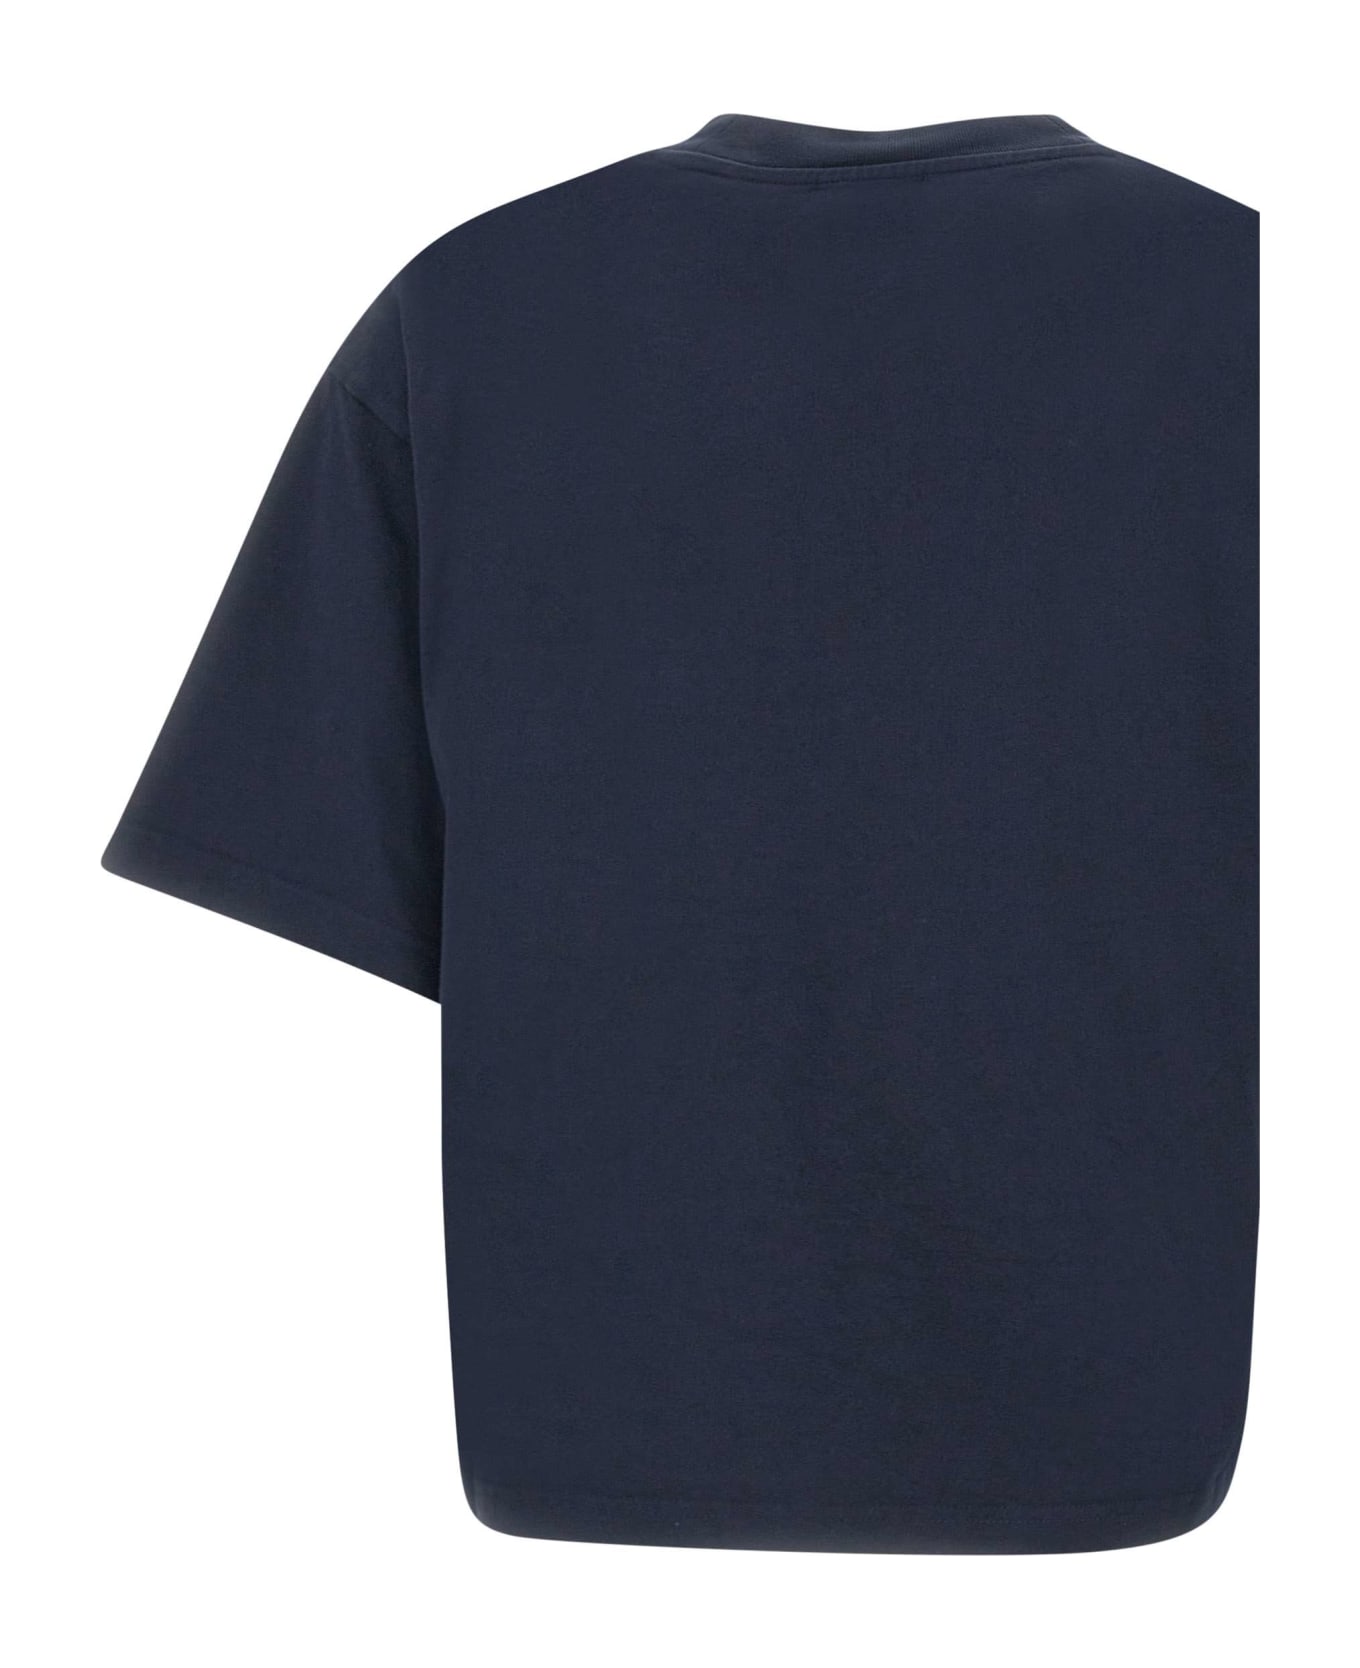 Woolrich "graphic" Cotton T-shirt - BLUE